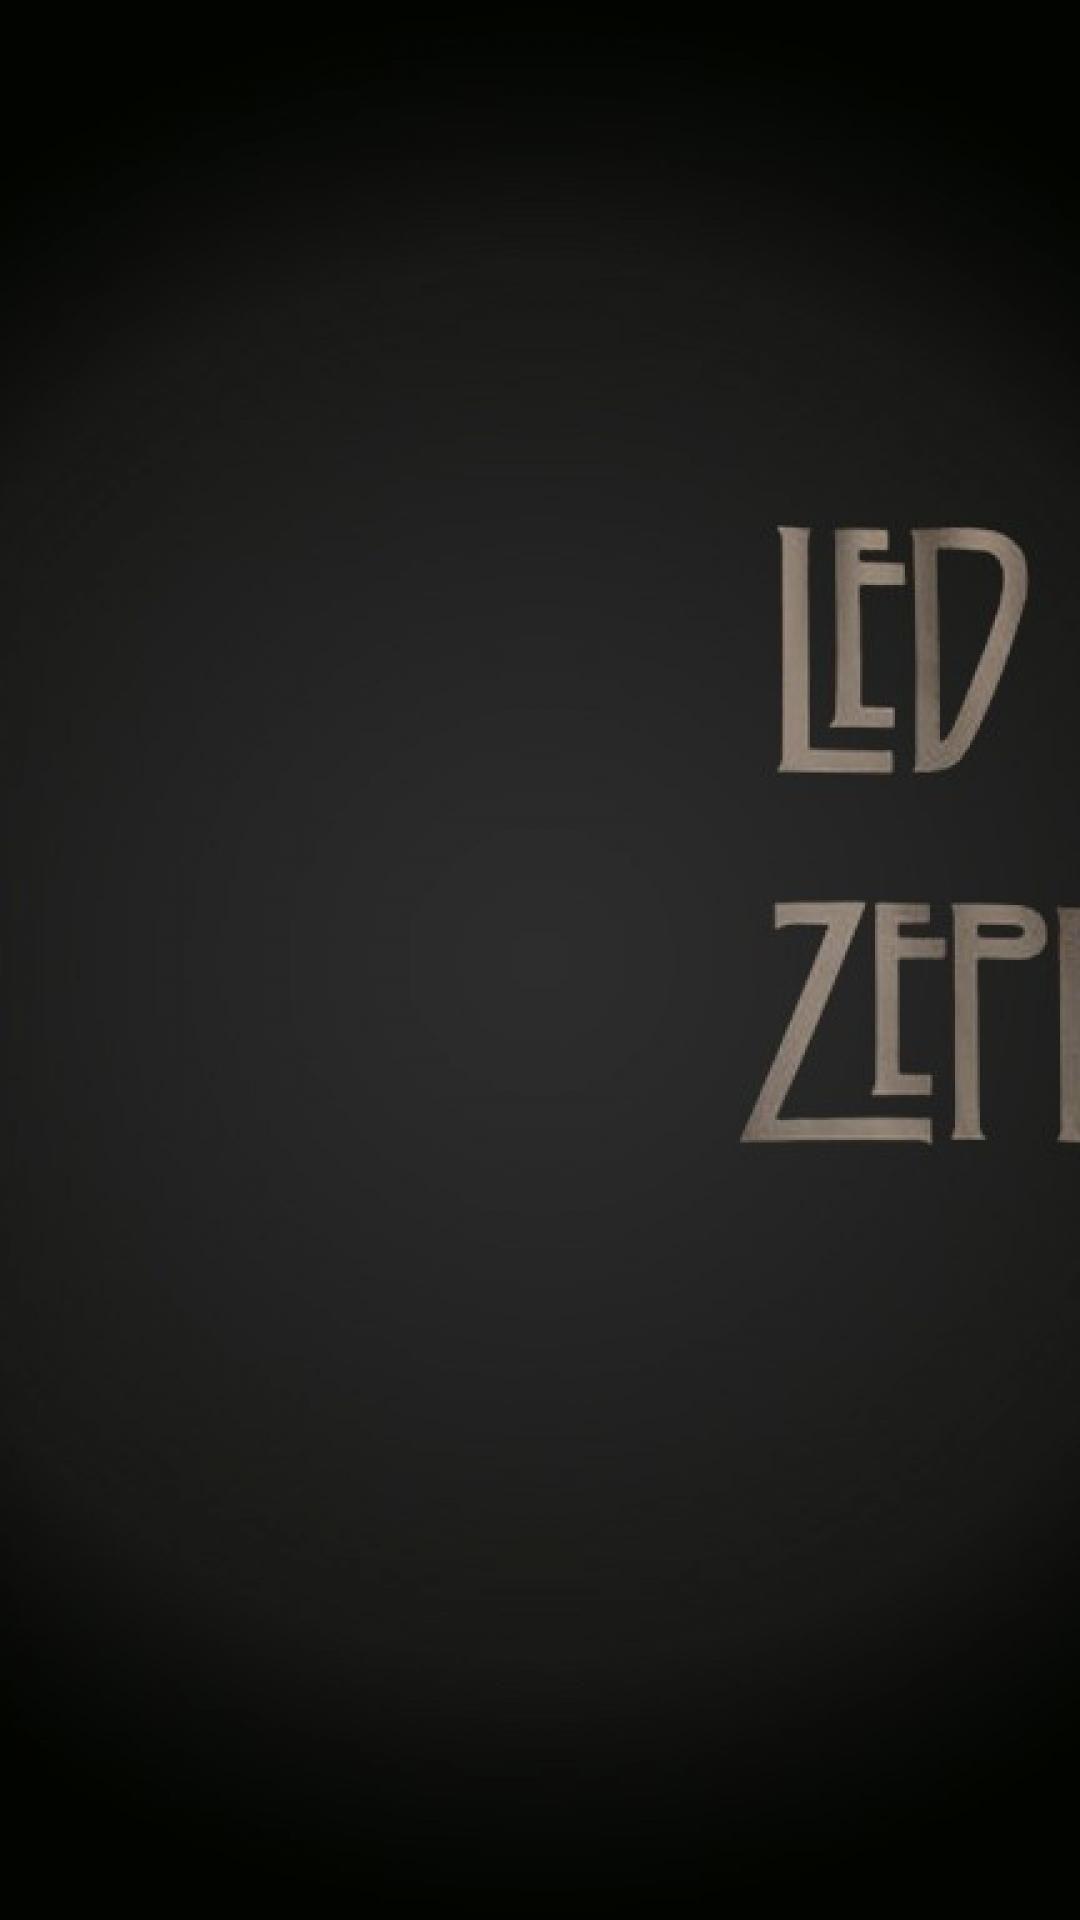 Music rock led zeppelin wallpaper